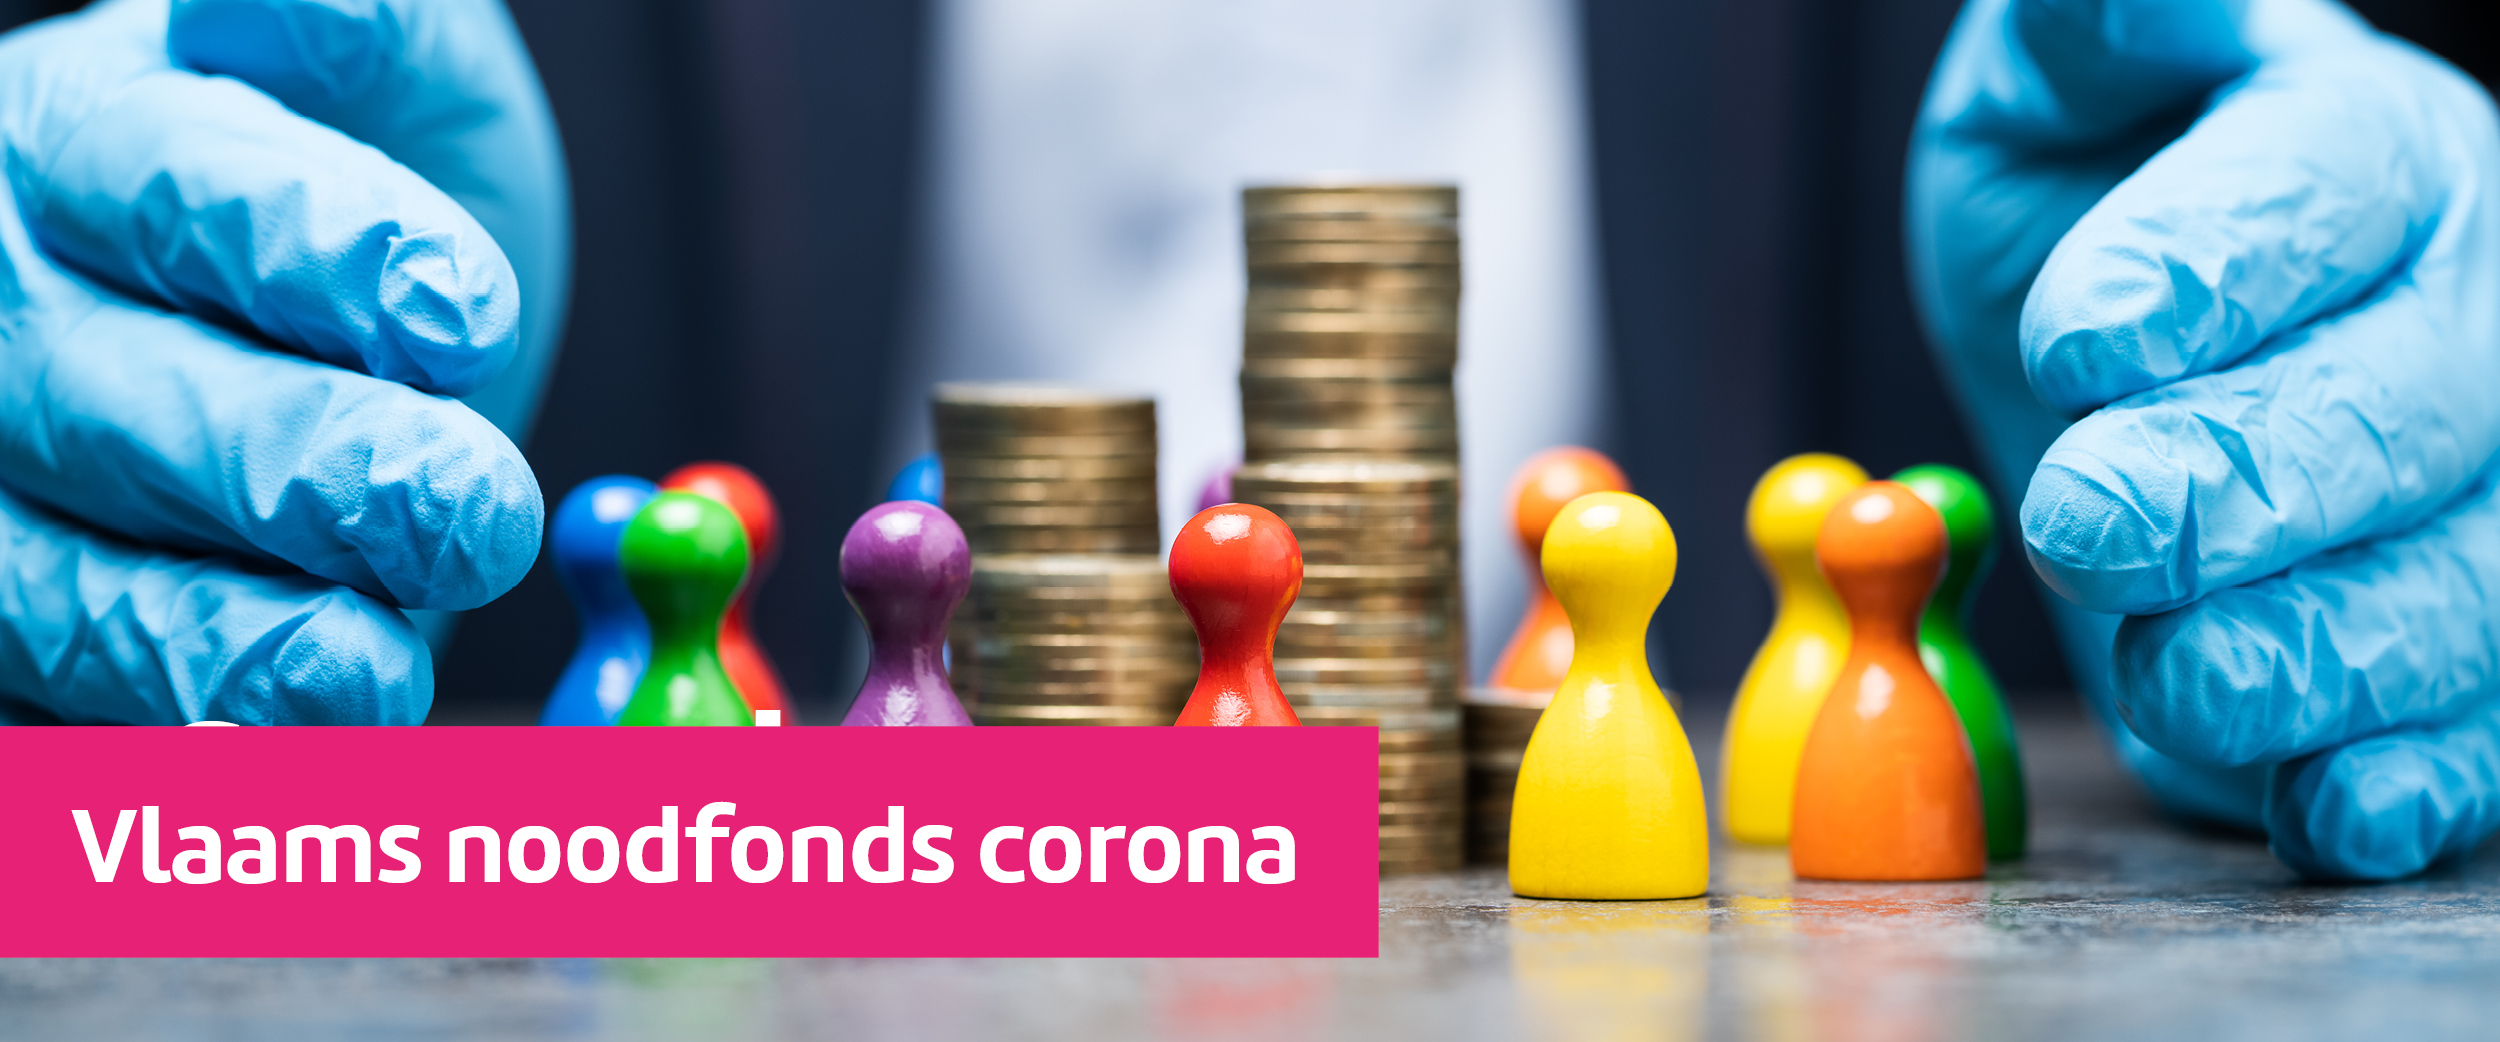 Vlaams noodfonds corona